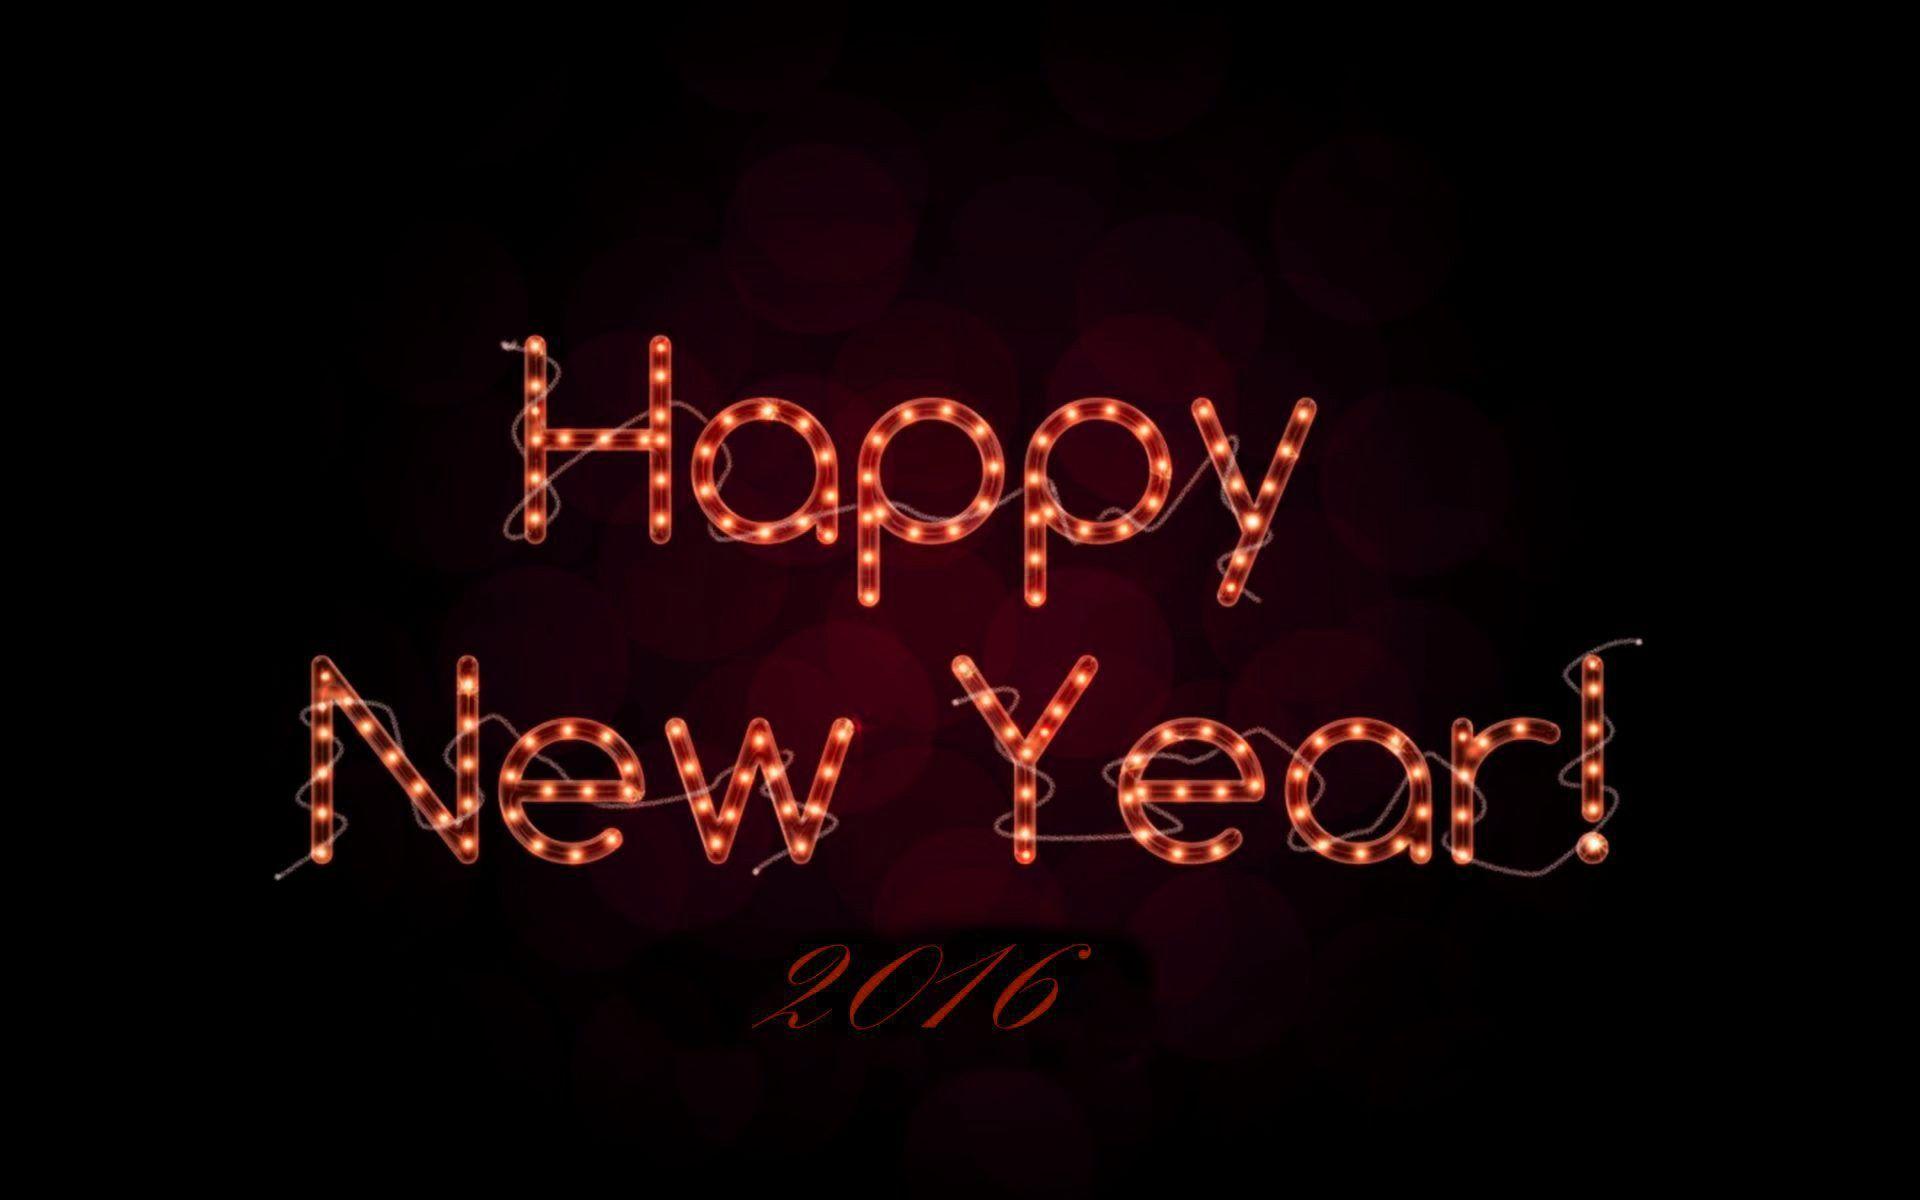 Happy New Year 2016 HD Wallpaper.info. Free HD